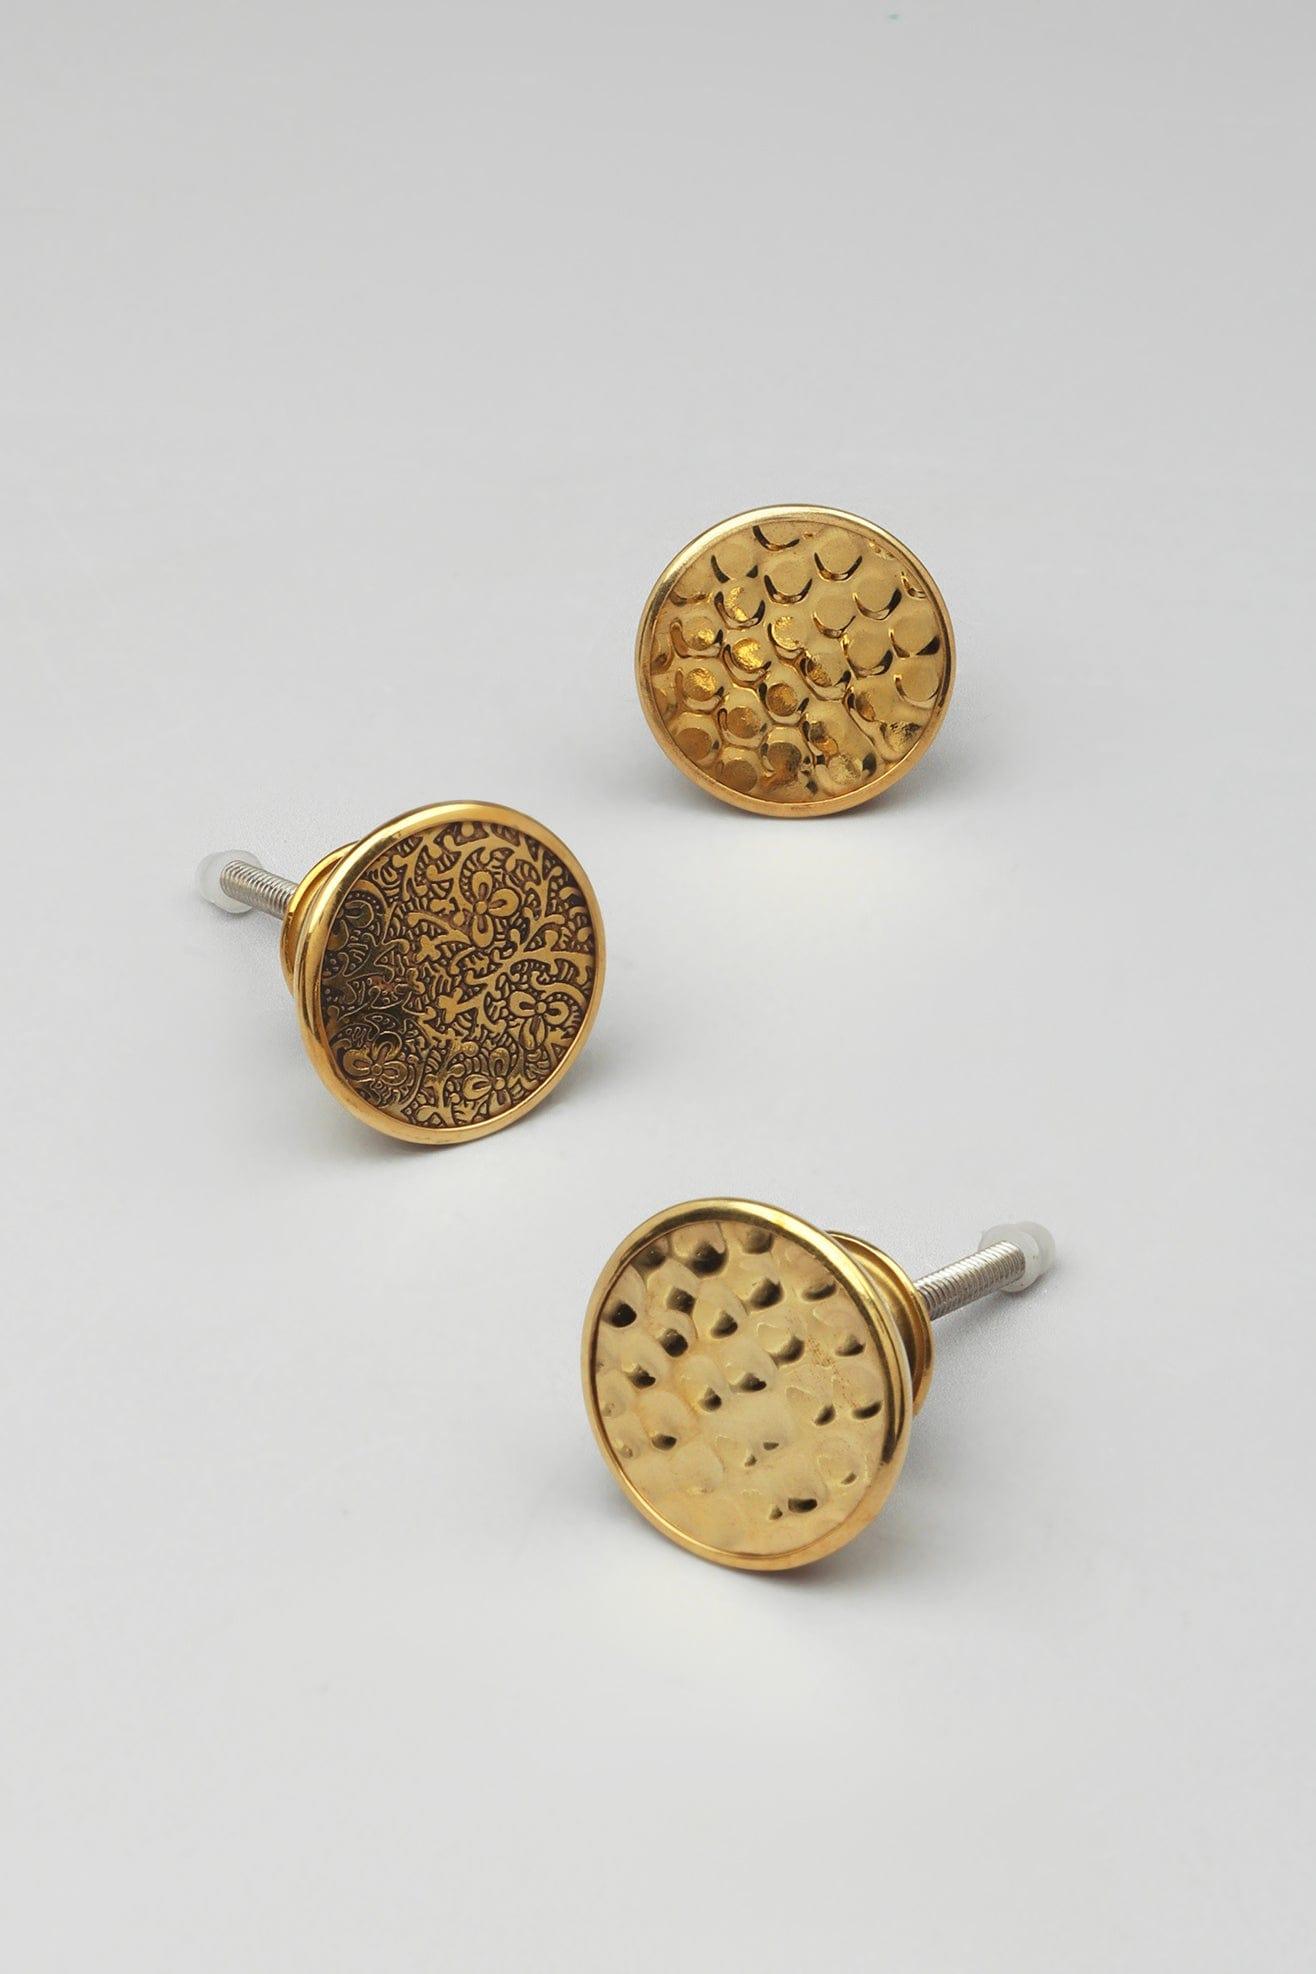 G Decor Door Knobs & Handles Brass Honeywax Round Circular Detailed Pull Knobs